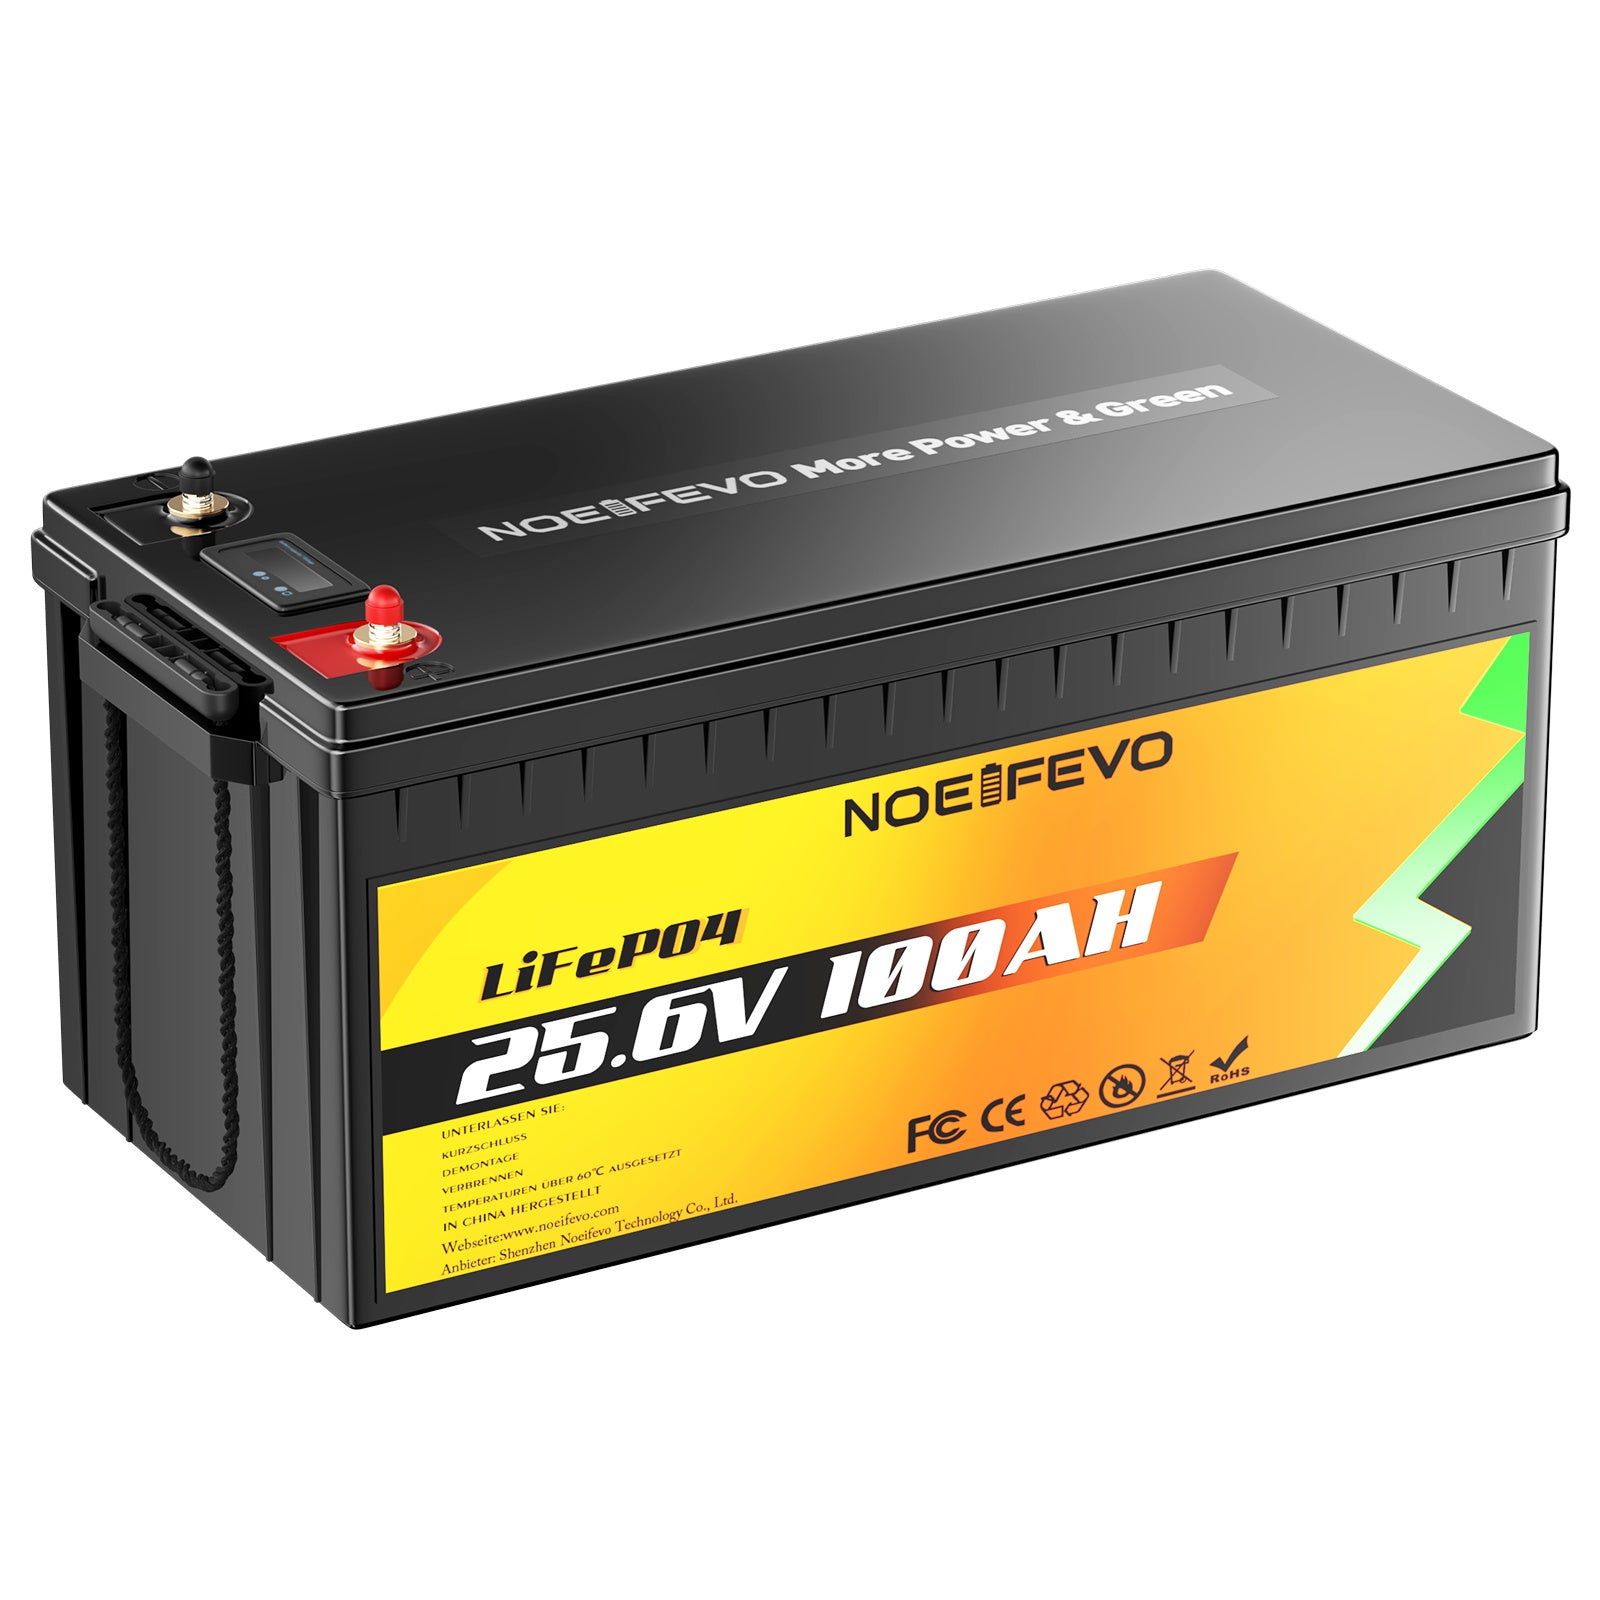 NOEIFEVO F2410 25.6V 100AH Batería de Litio Hierro Fosfato LiFePO4 Batería Con 100A BMS